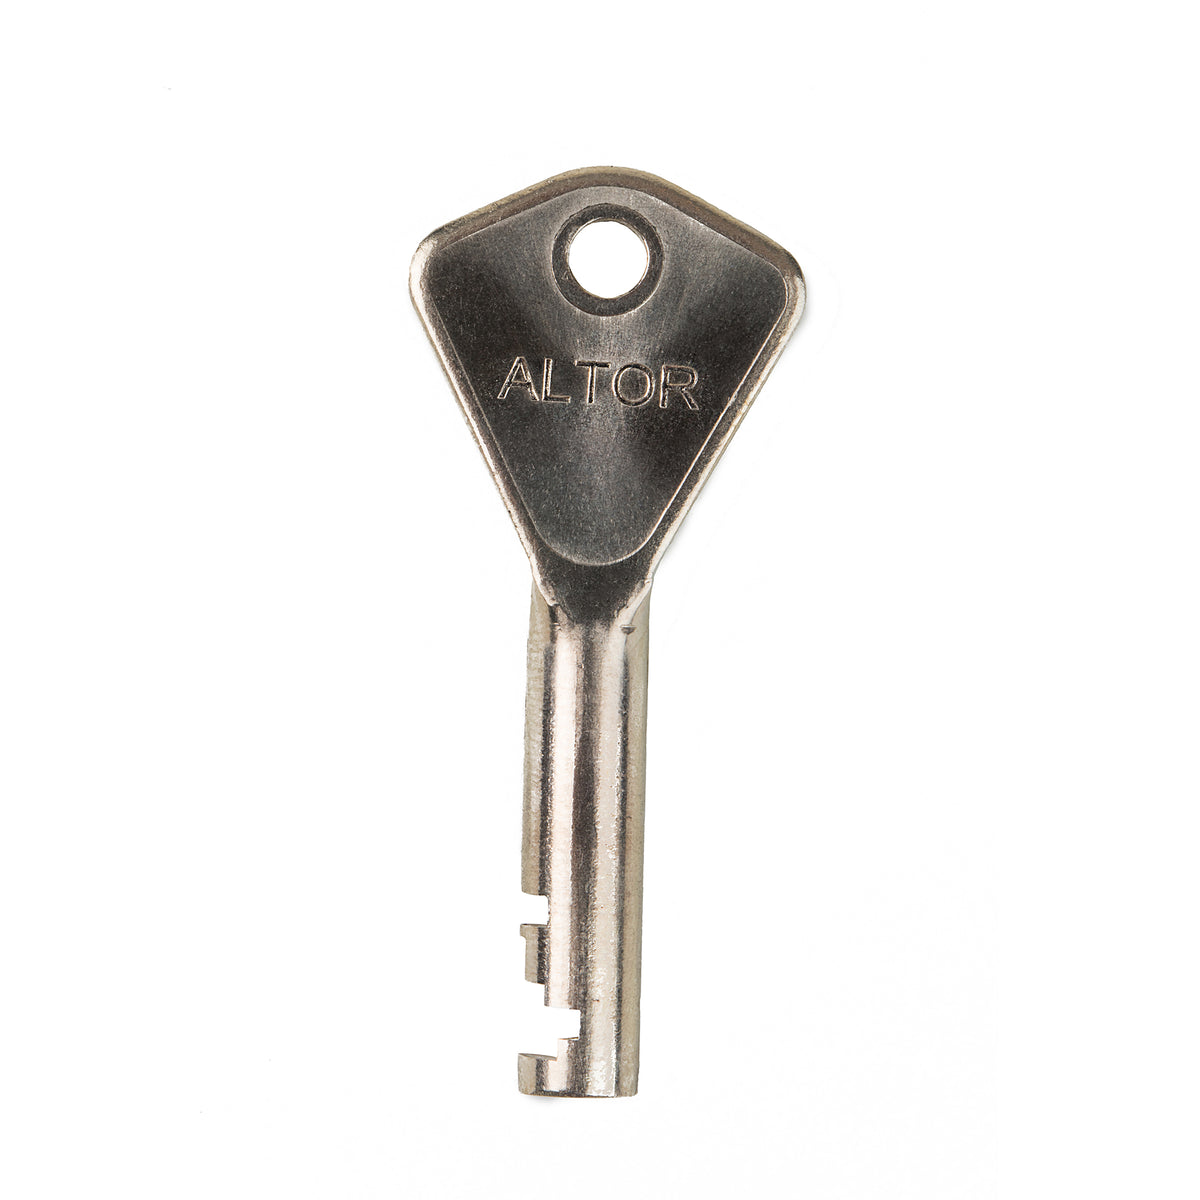 APEX Series Keys